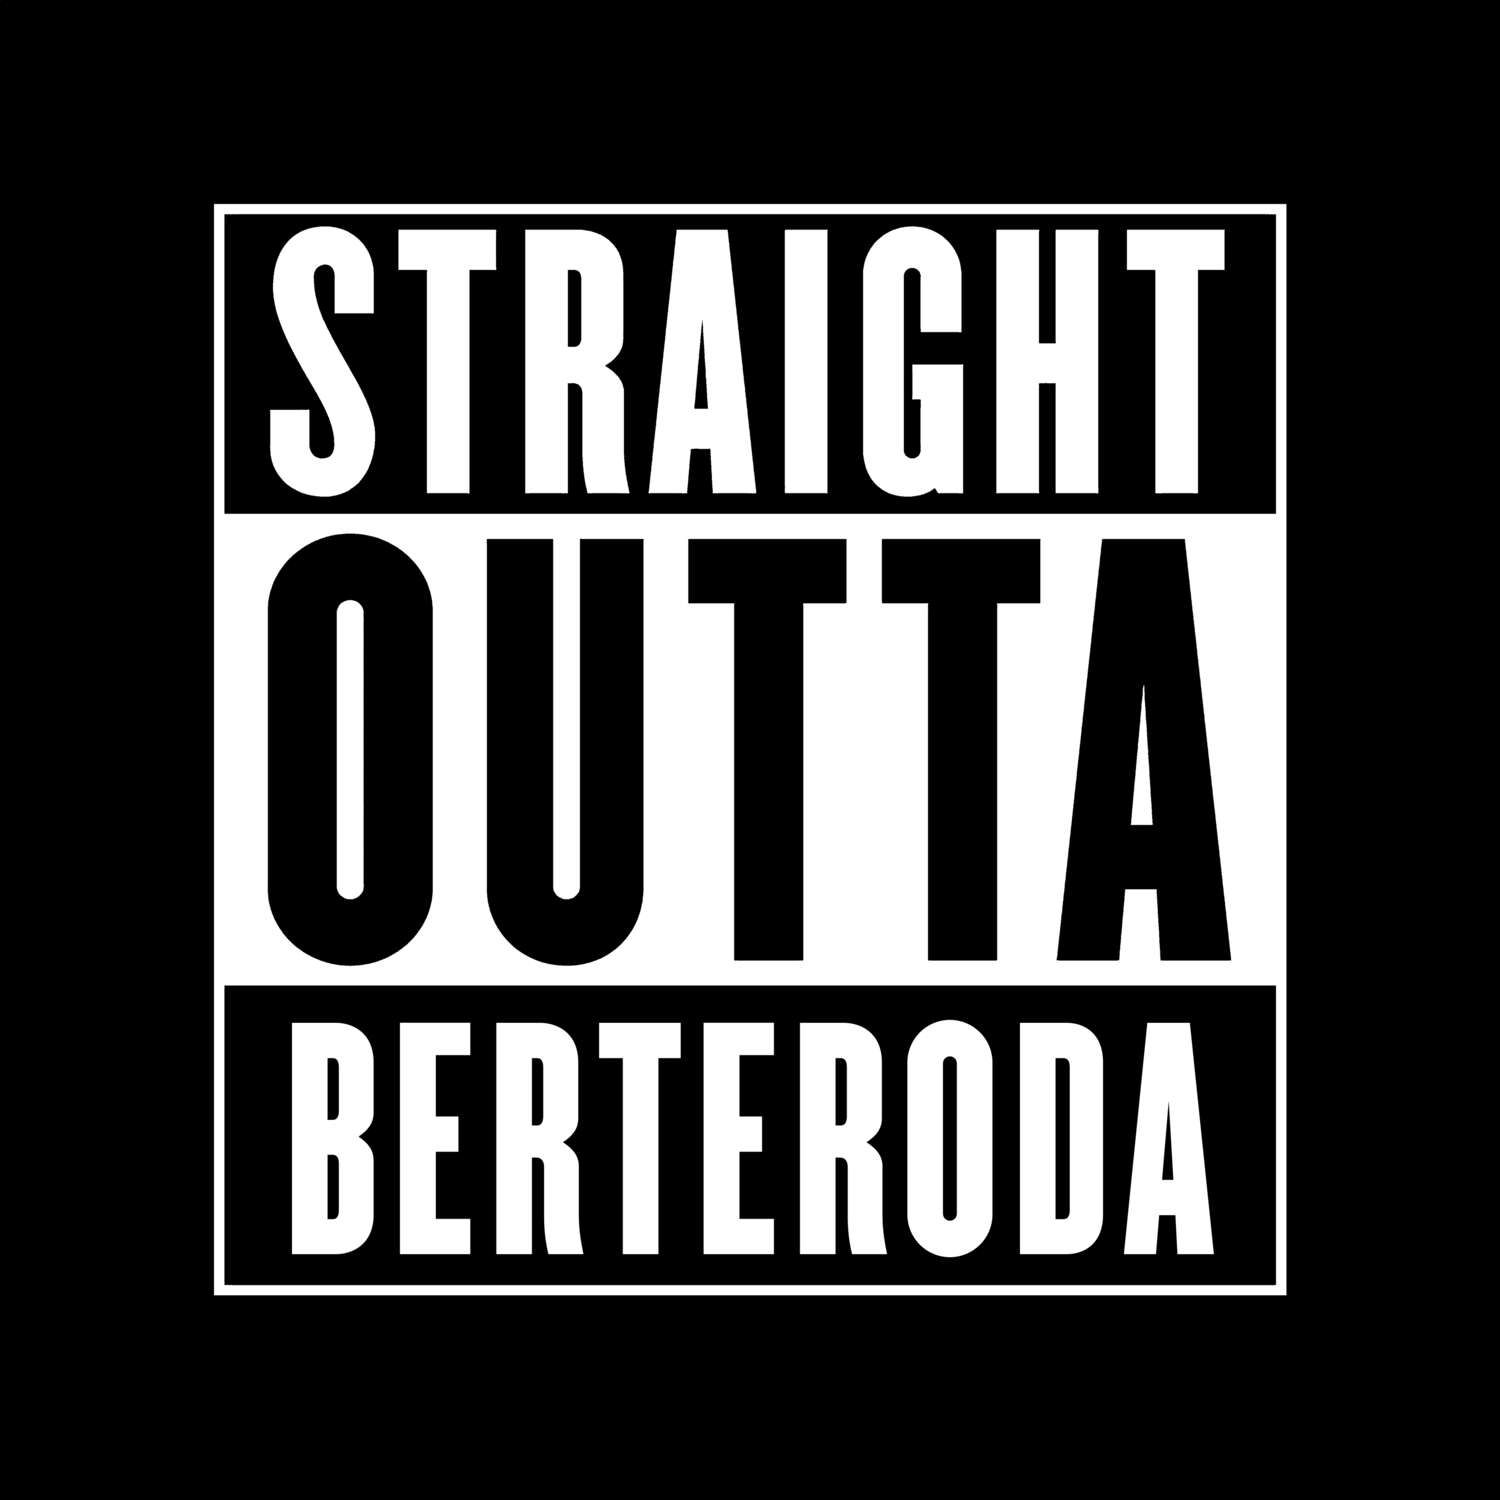 Berteroda T-Shirt »Straight Outta«